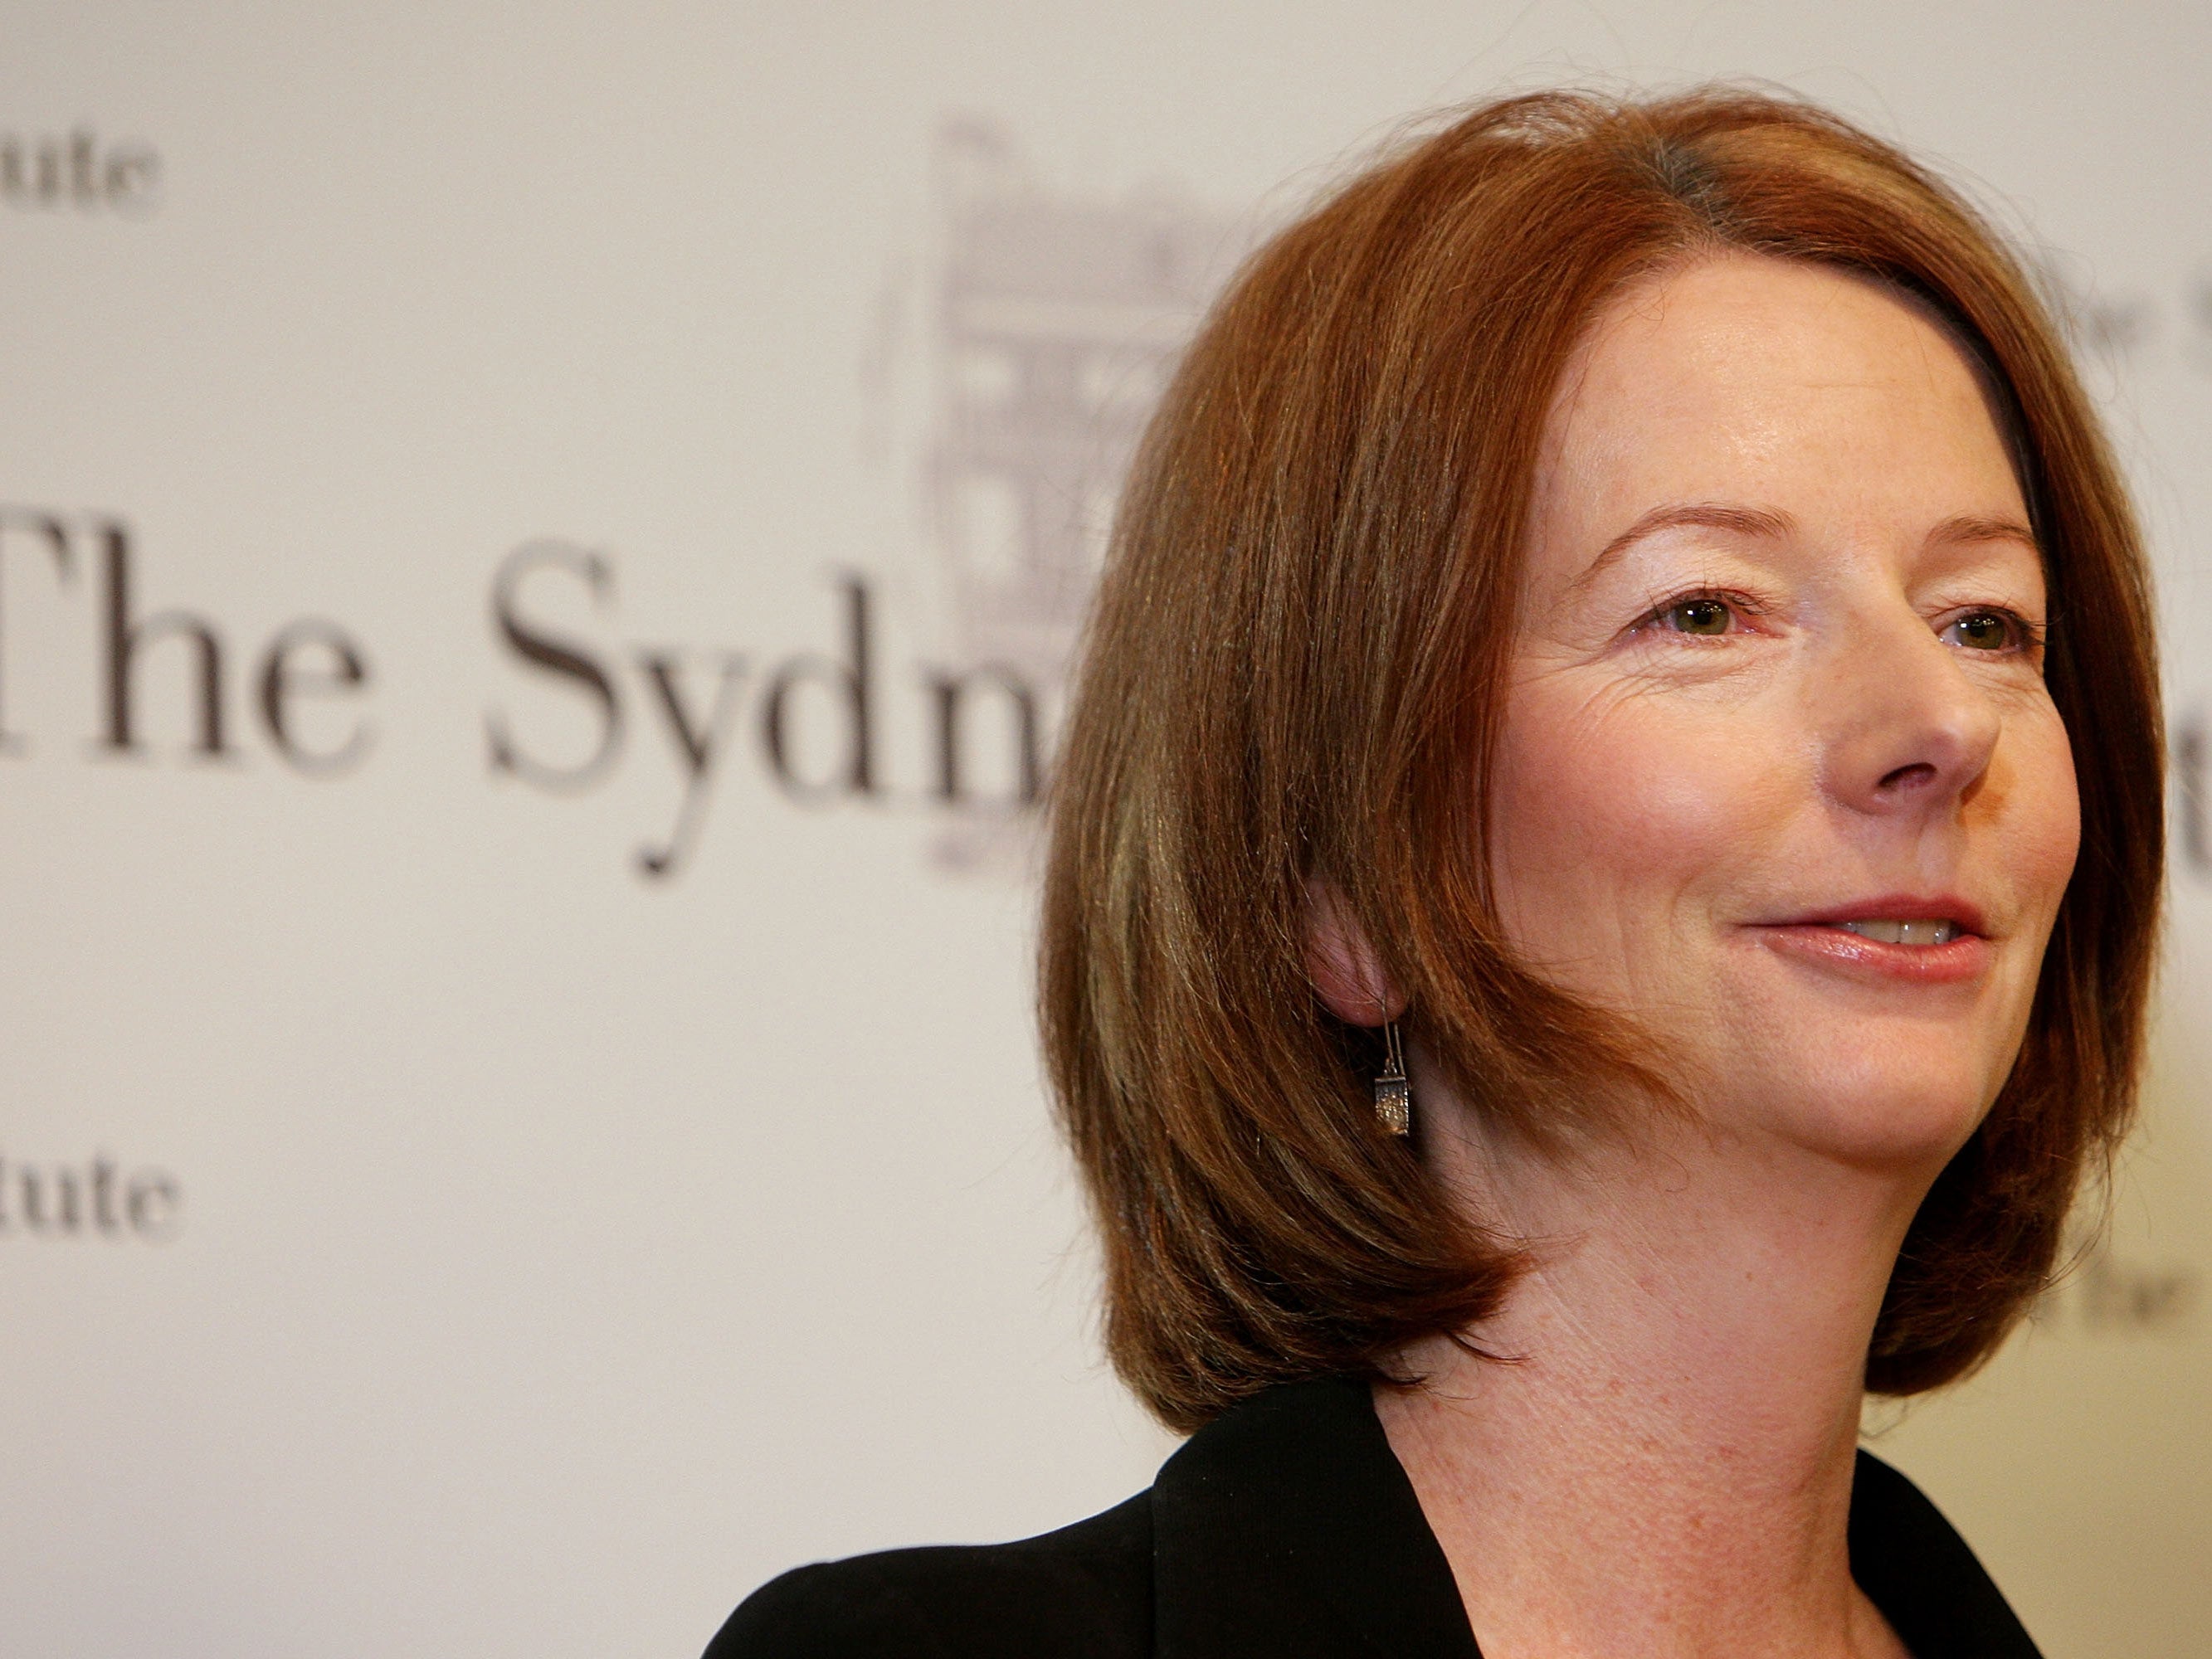 Julia Gillard became the first female Prime Minister of Australia in 2010